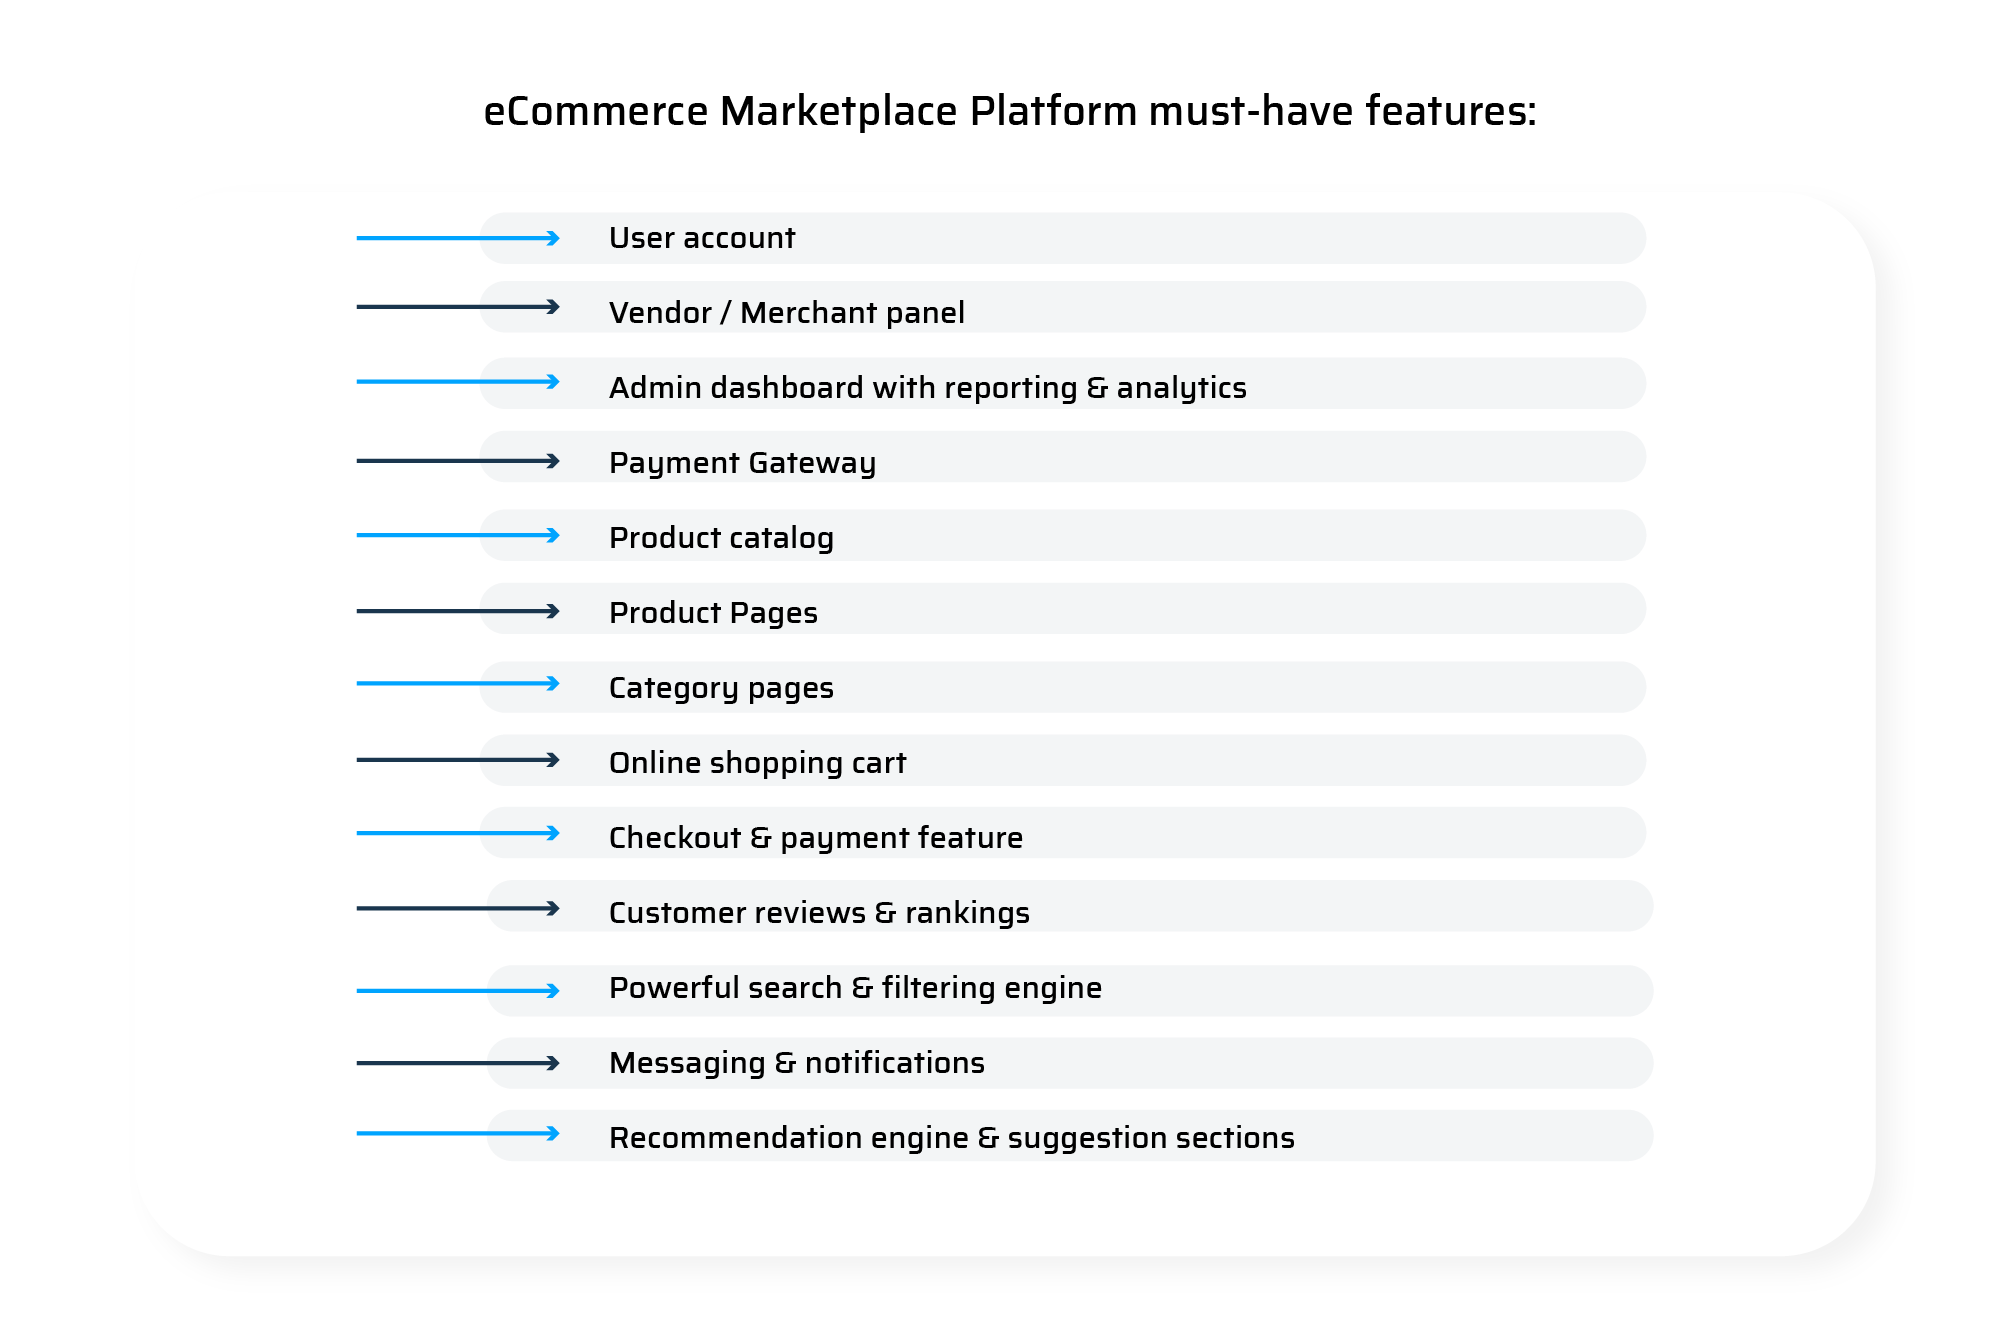 ecommerce marketplace platform must-have